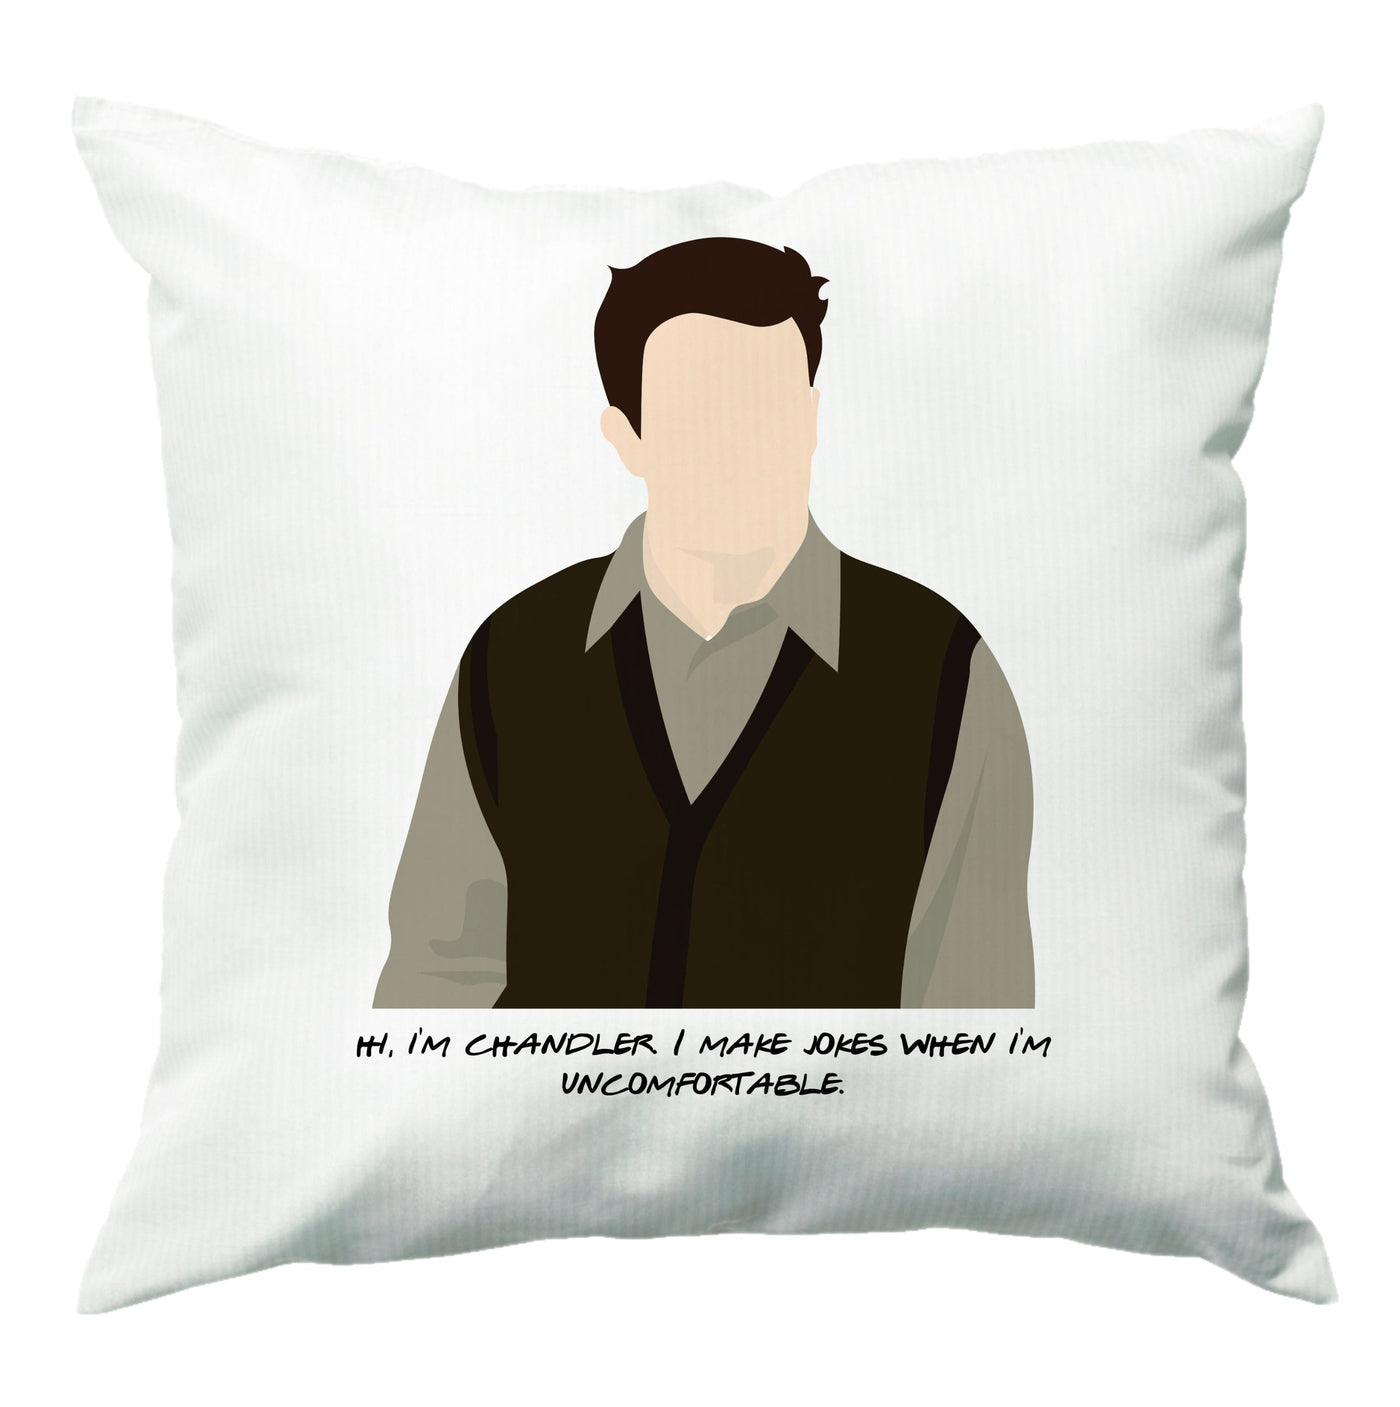 Hi, I'm Chandler - Friends Cushion